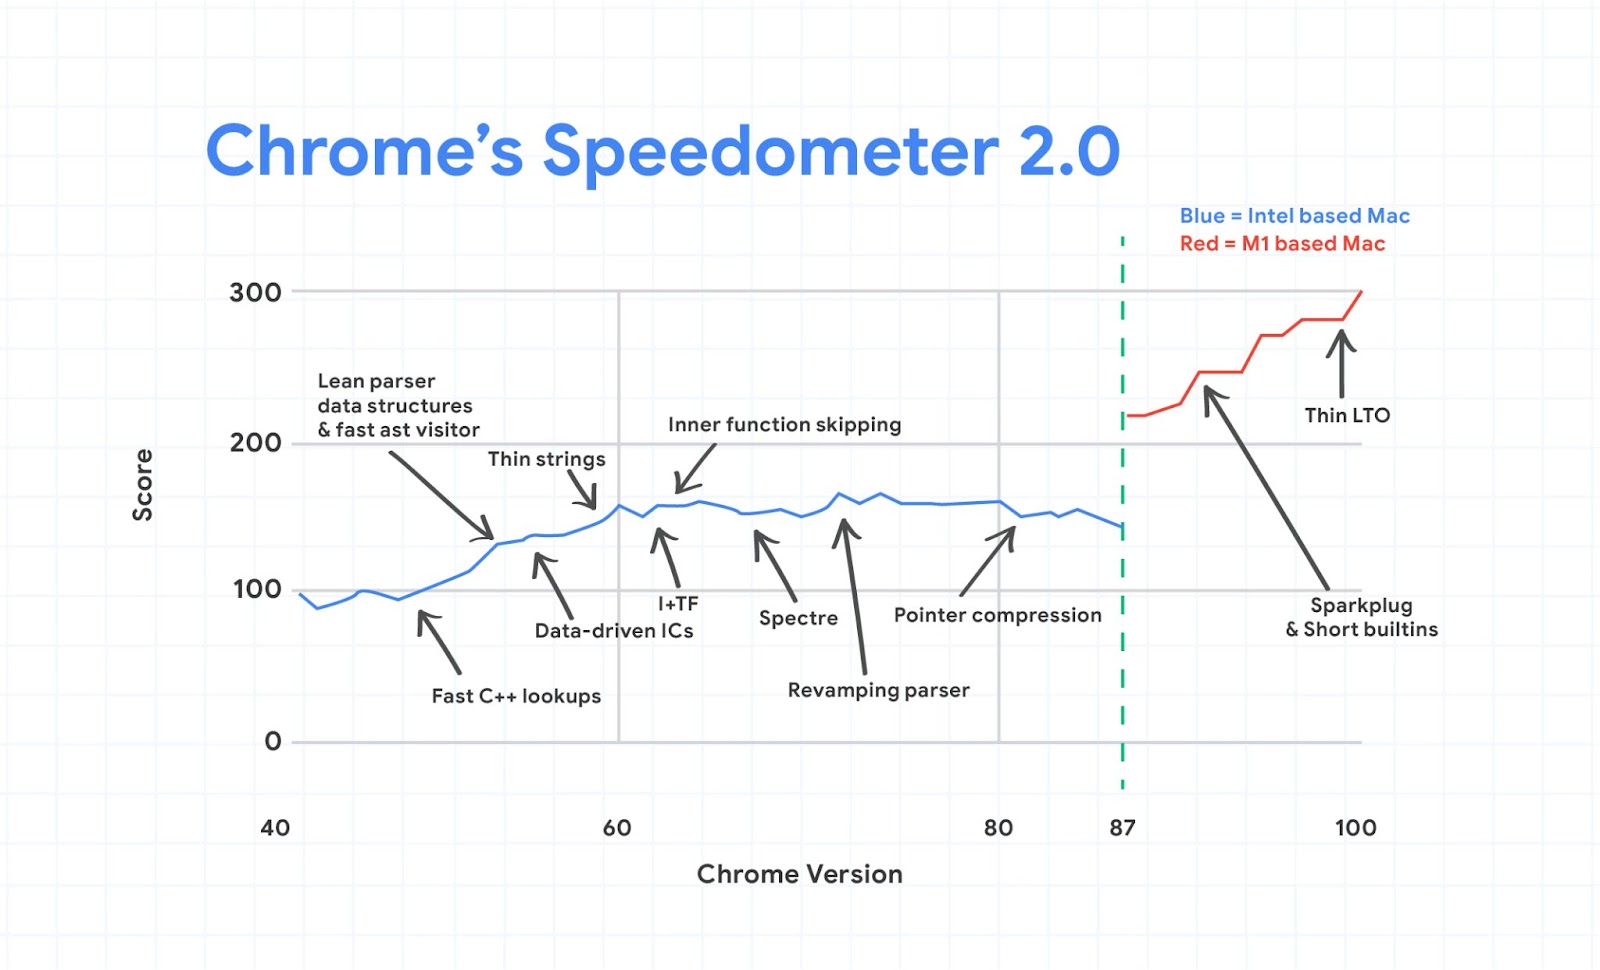 google chrome for mac slow